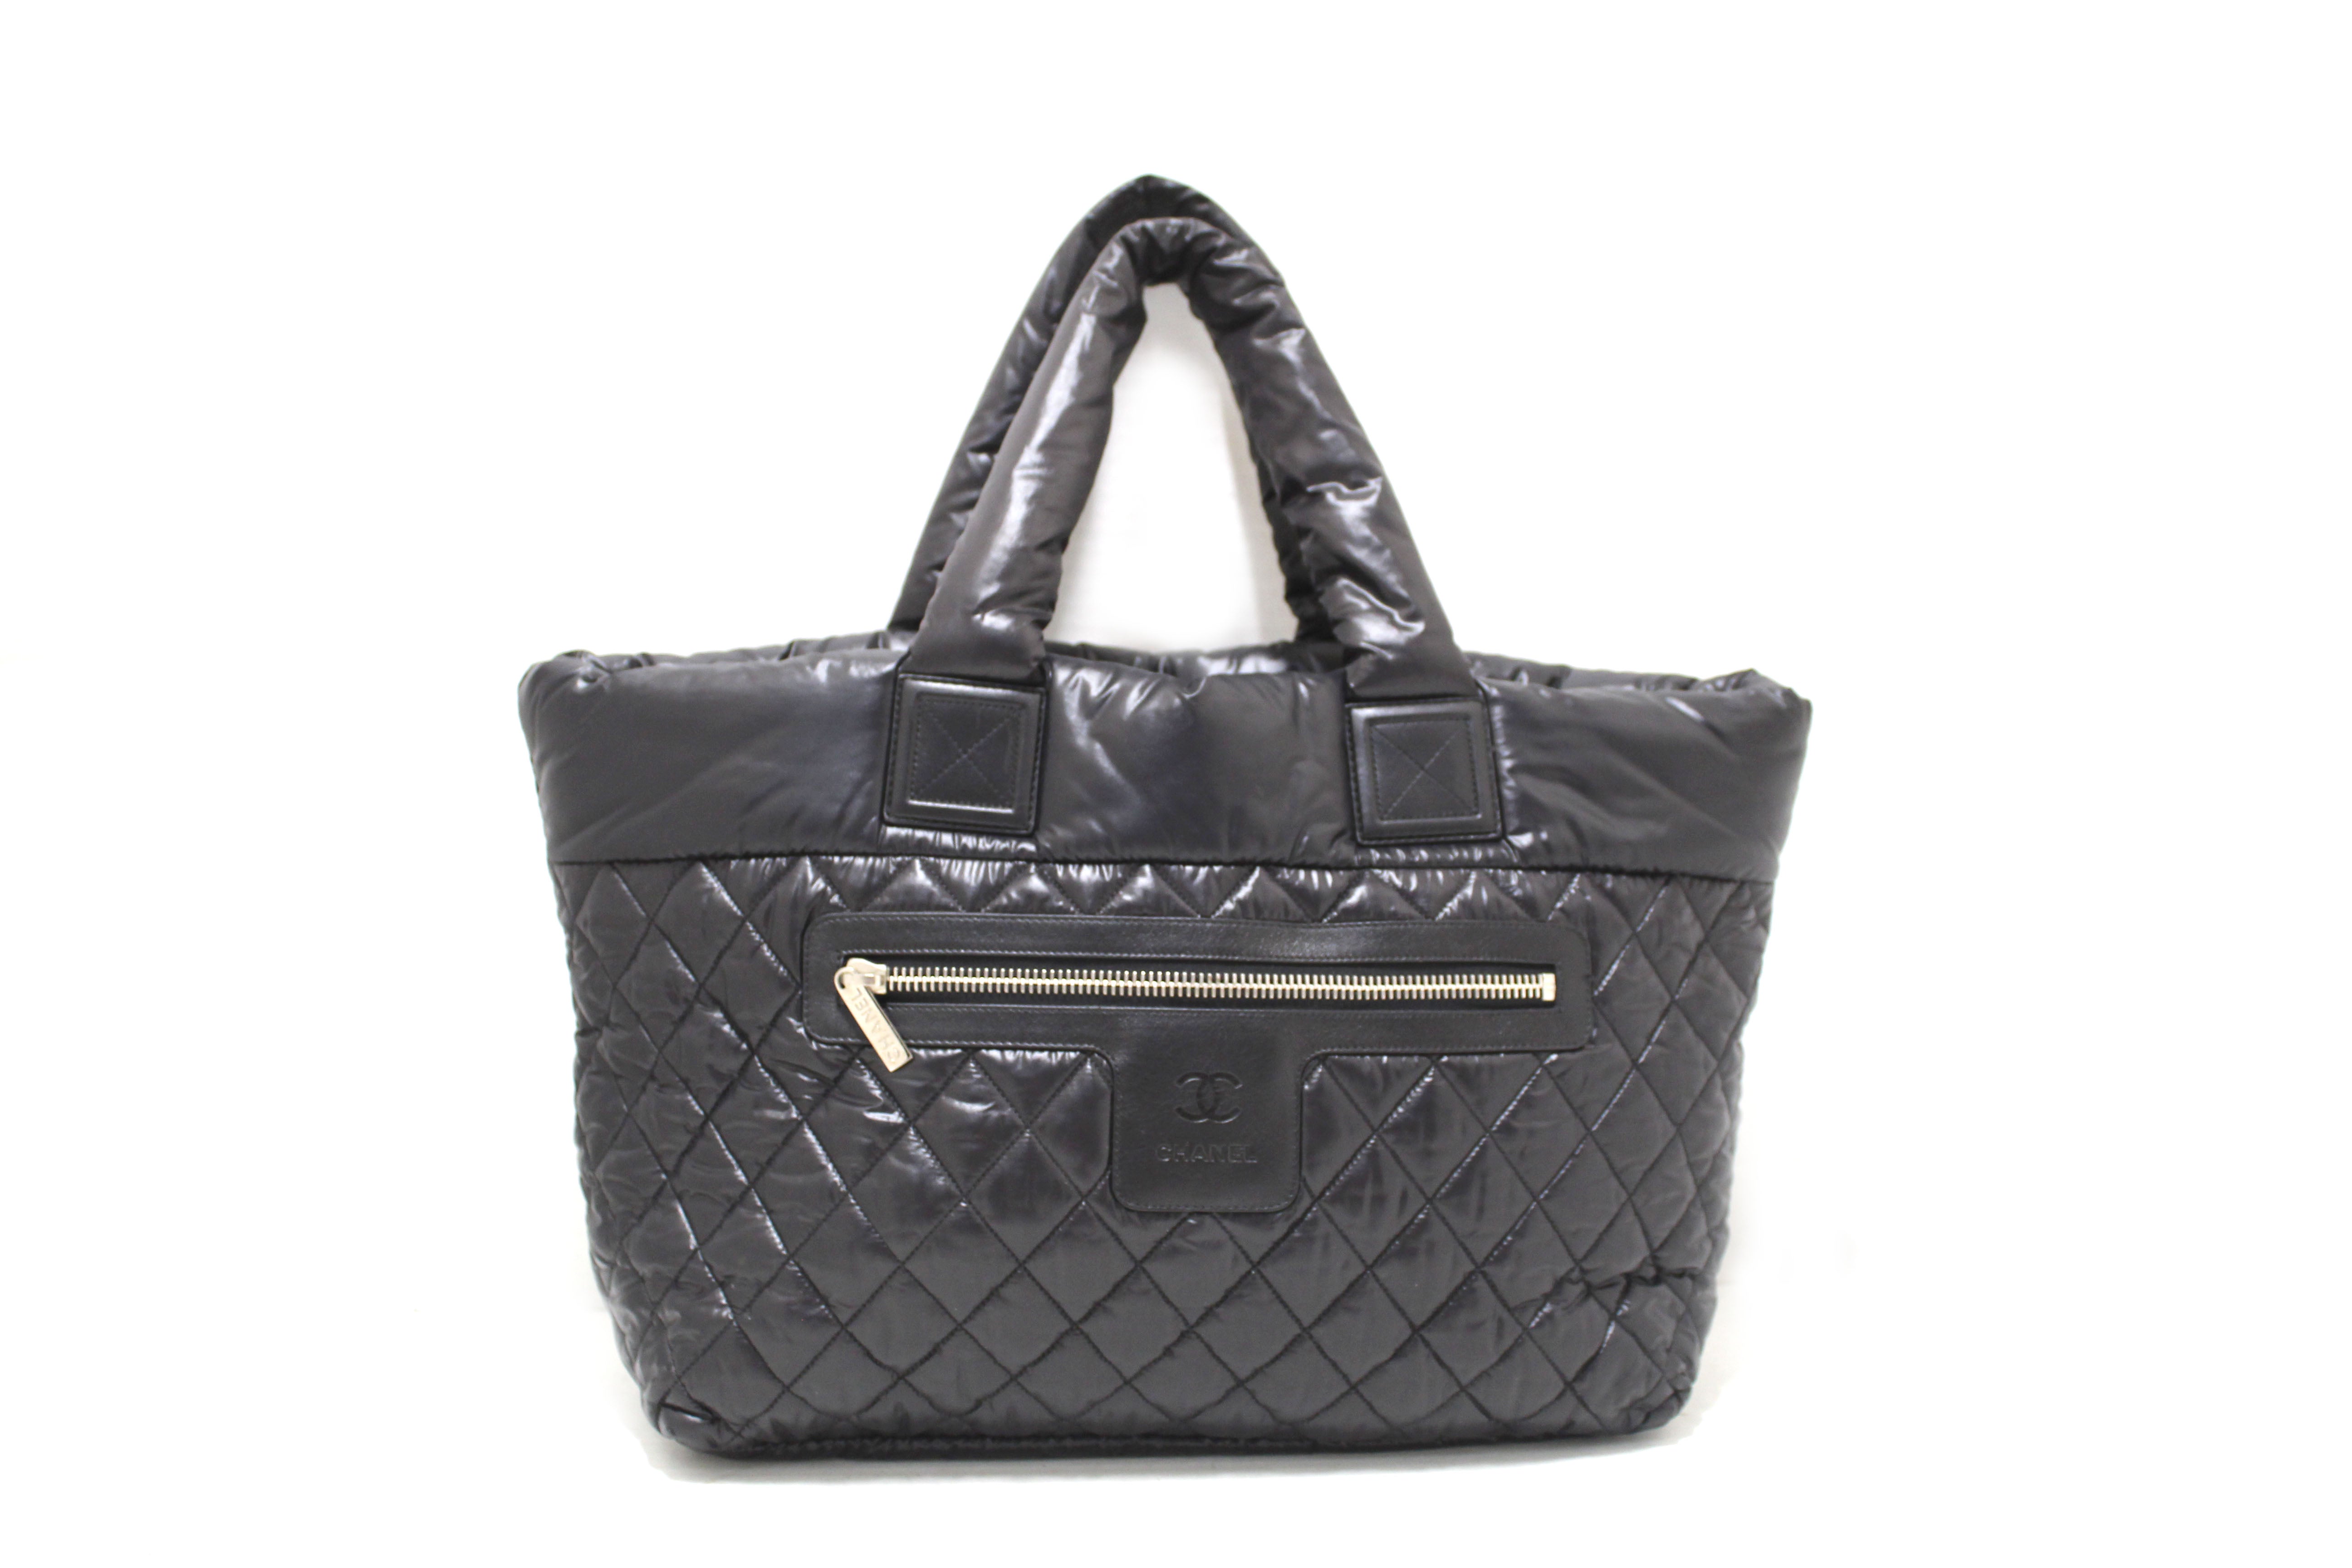 Chanel Nylon Polka Dot Medium Flap Bag